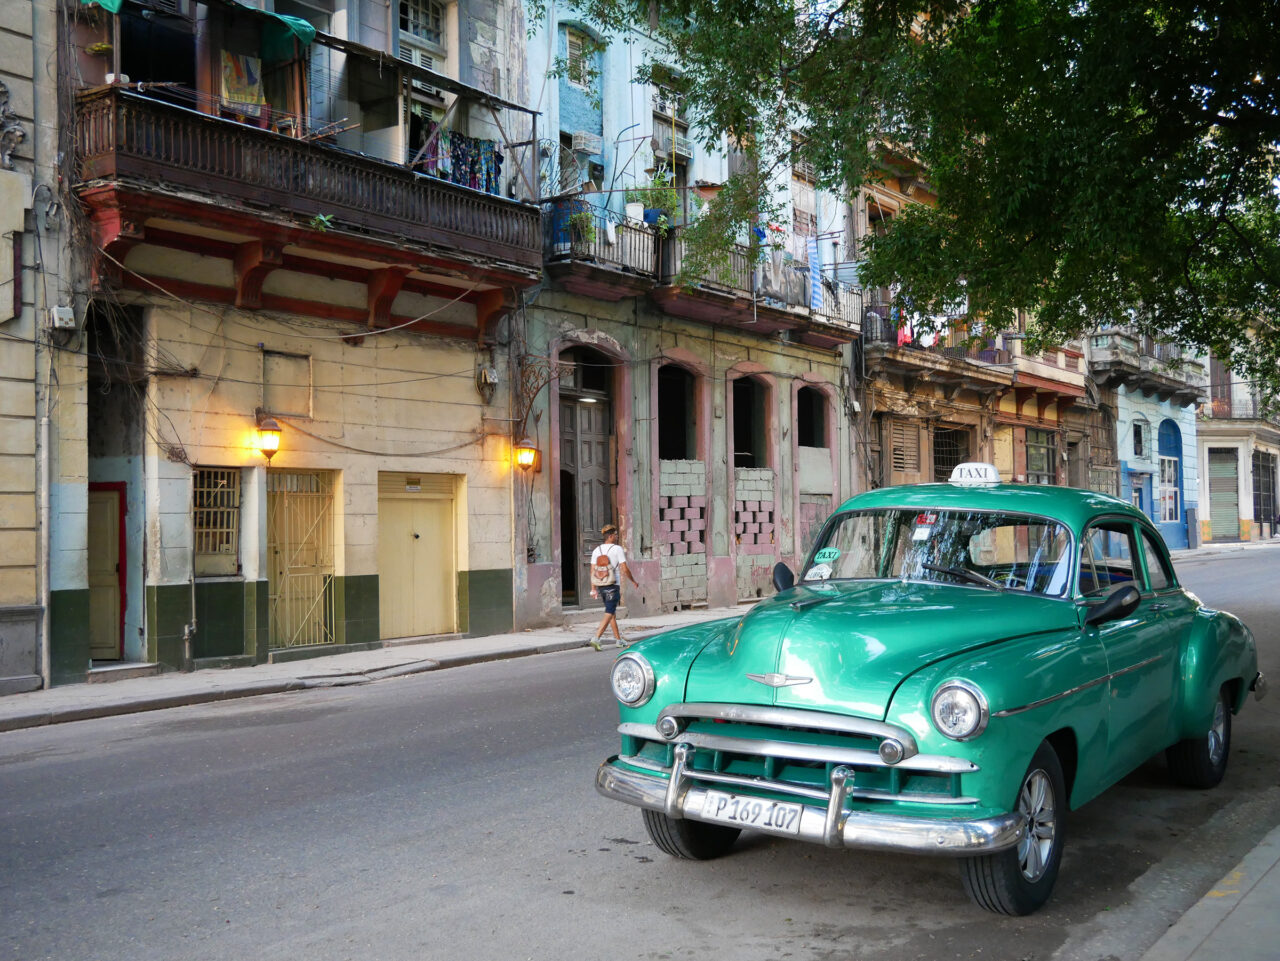 3 days in Havana Itinerary